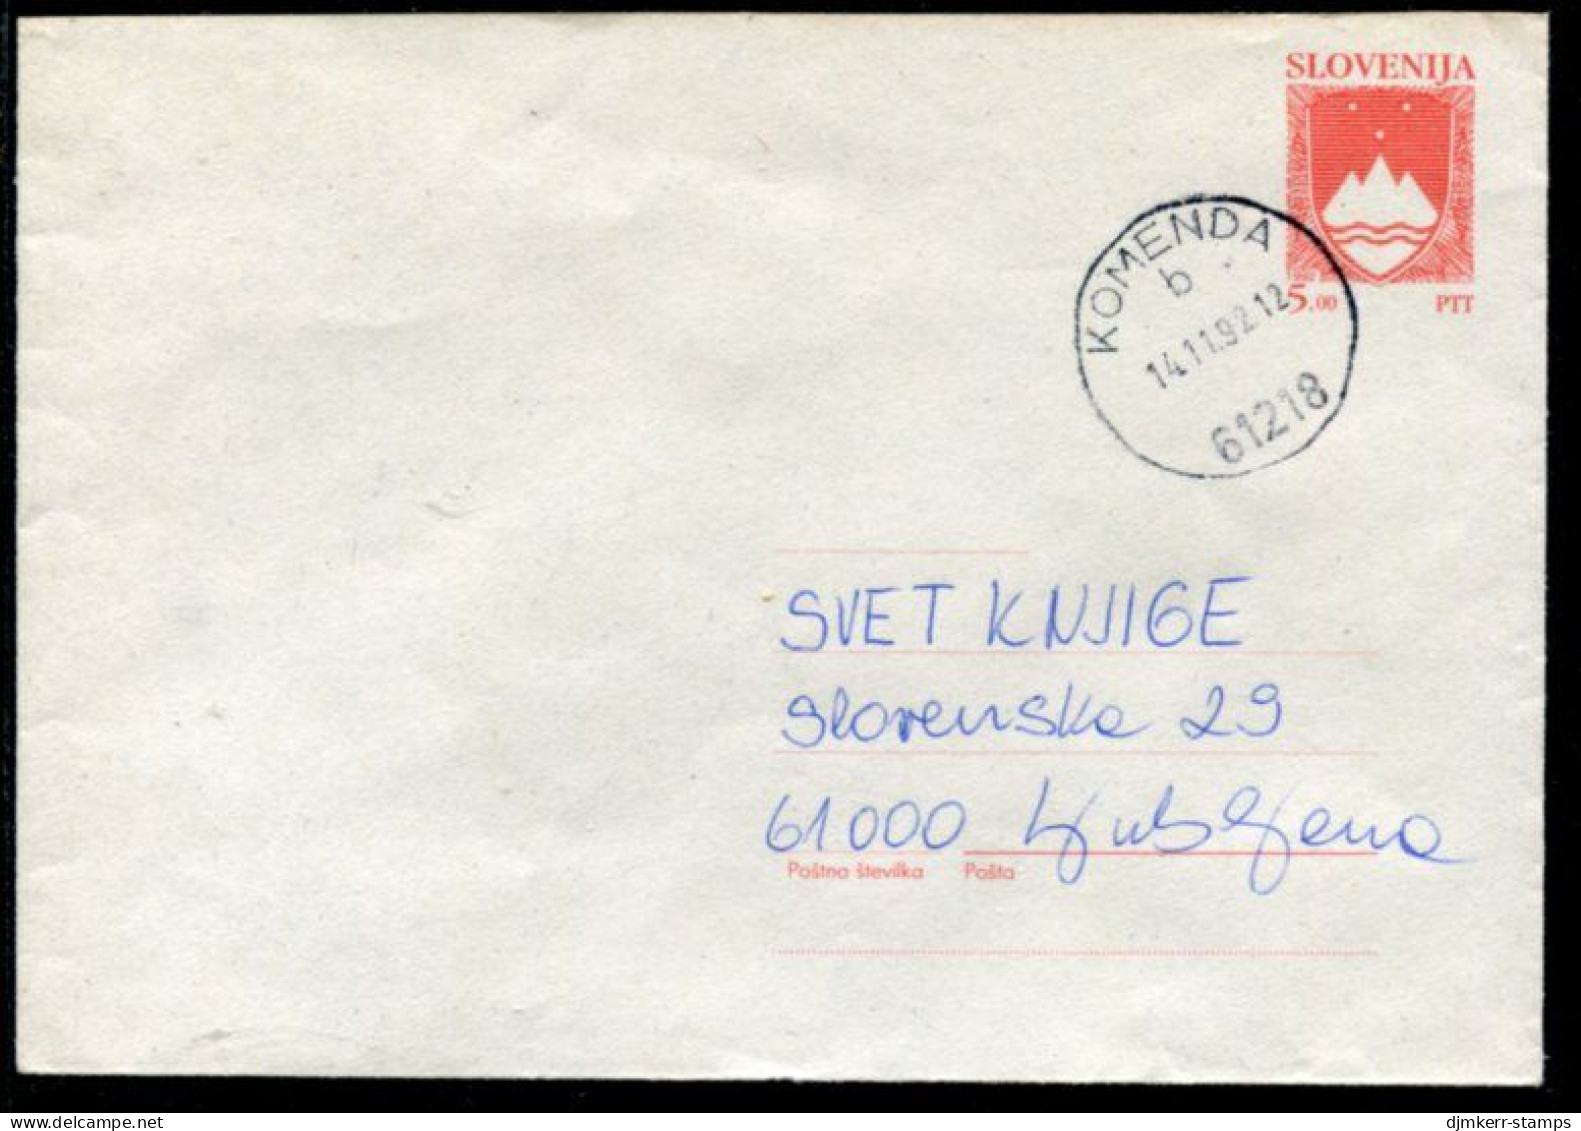 SLOVENIA 1992 5.00 T. Stationery Envelope On Grey Paper Used.  Michel U1b - Slowenien